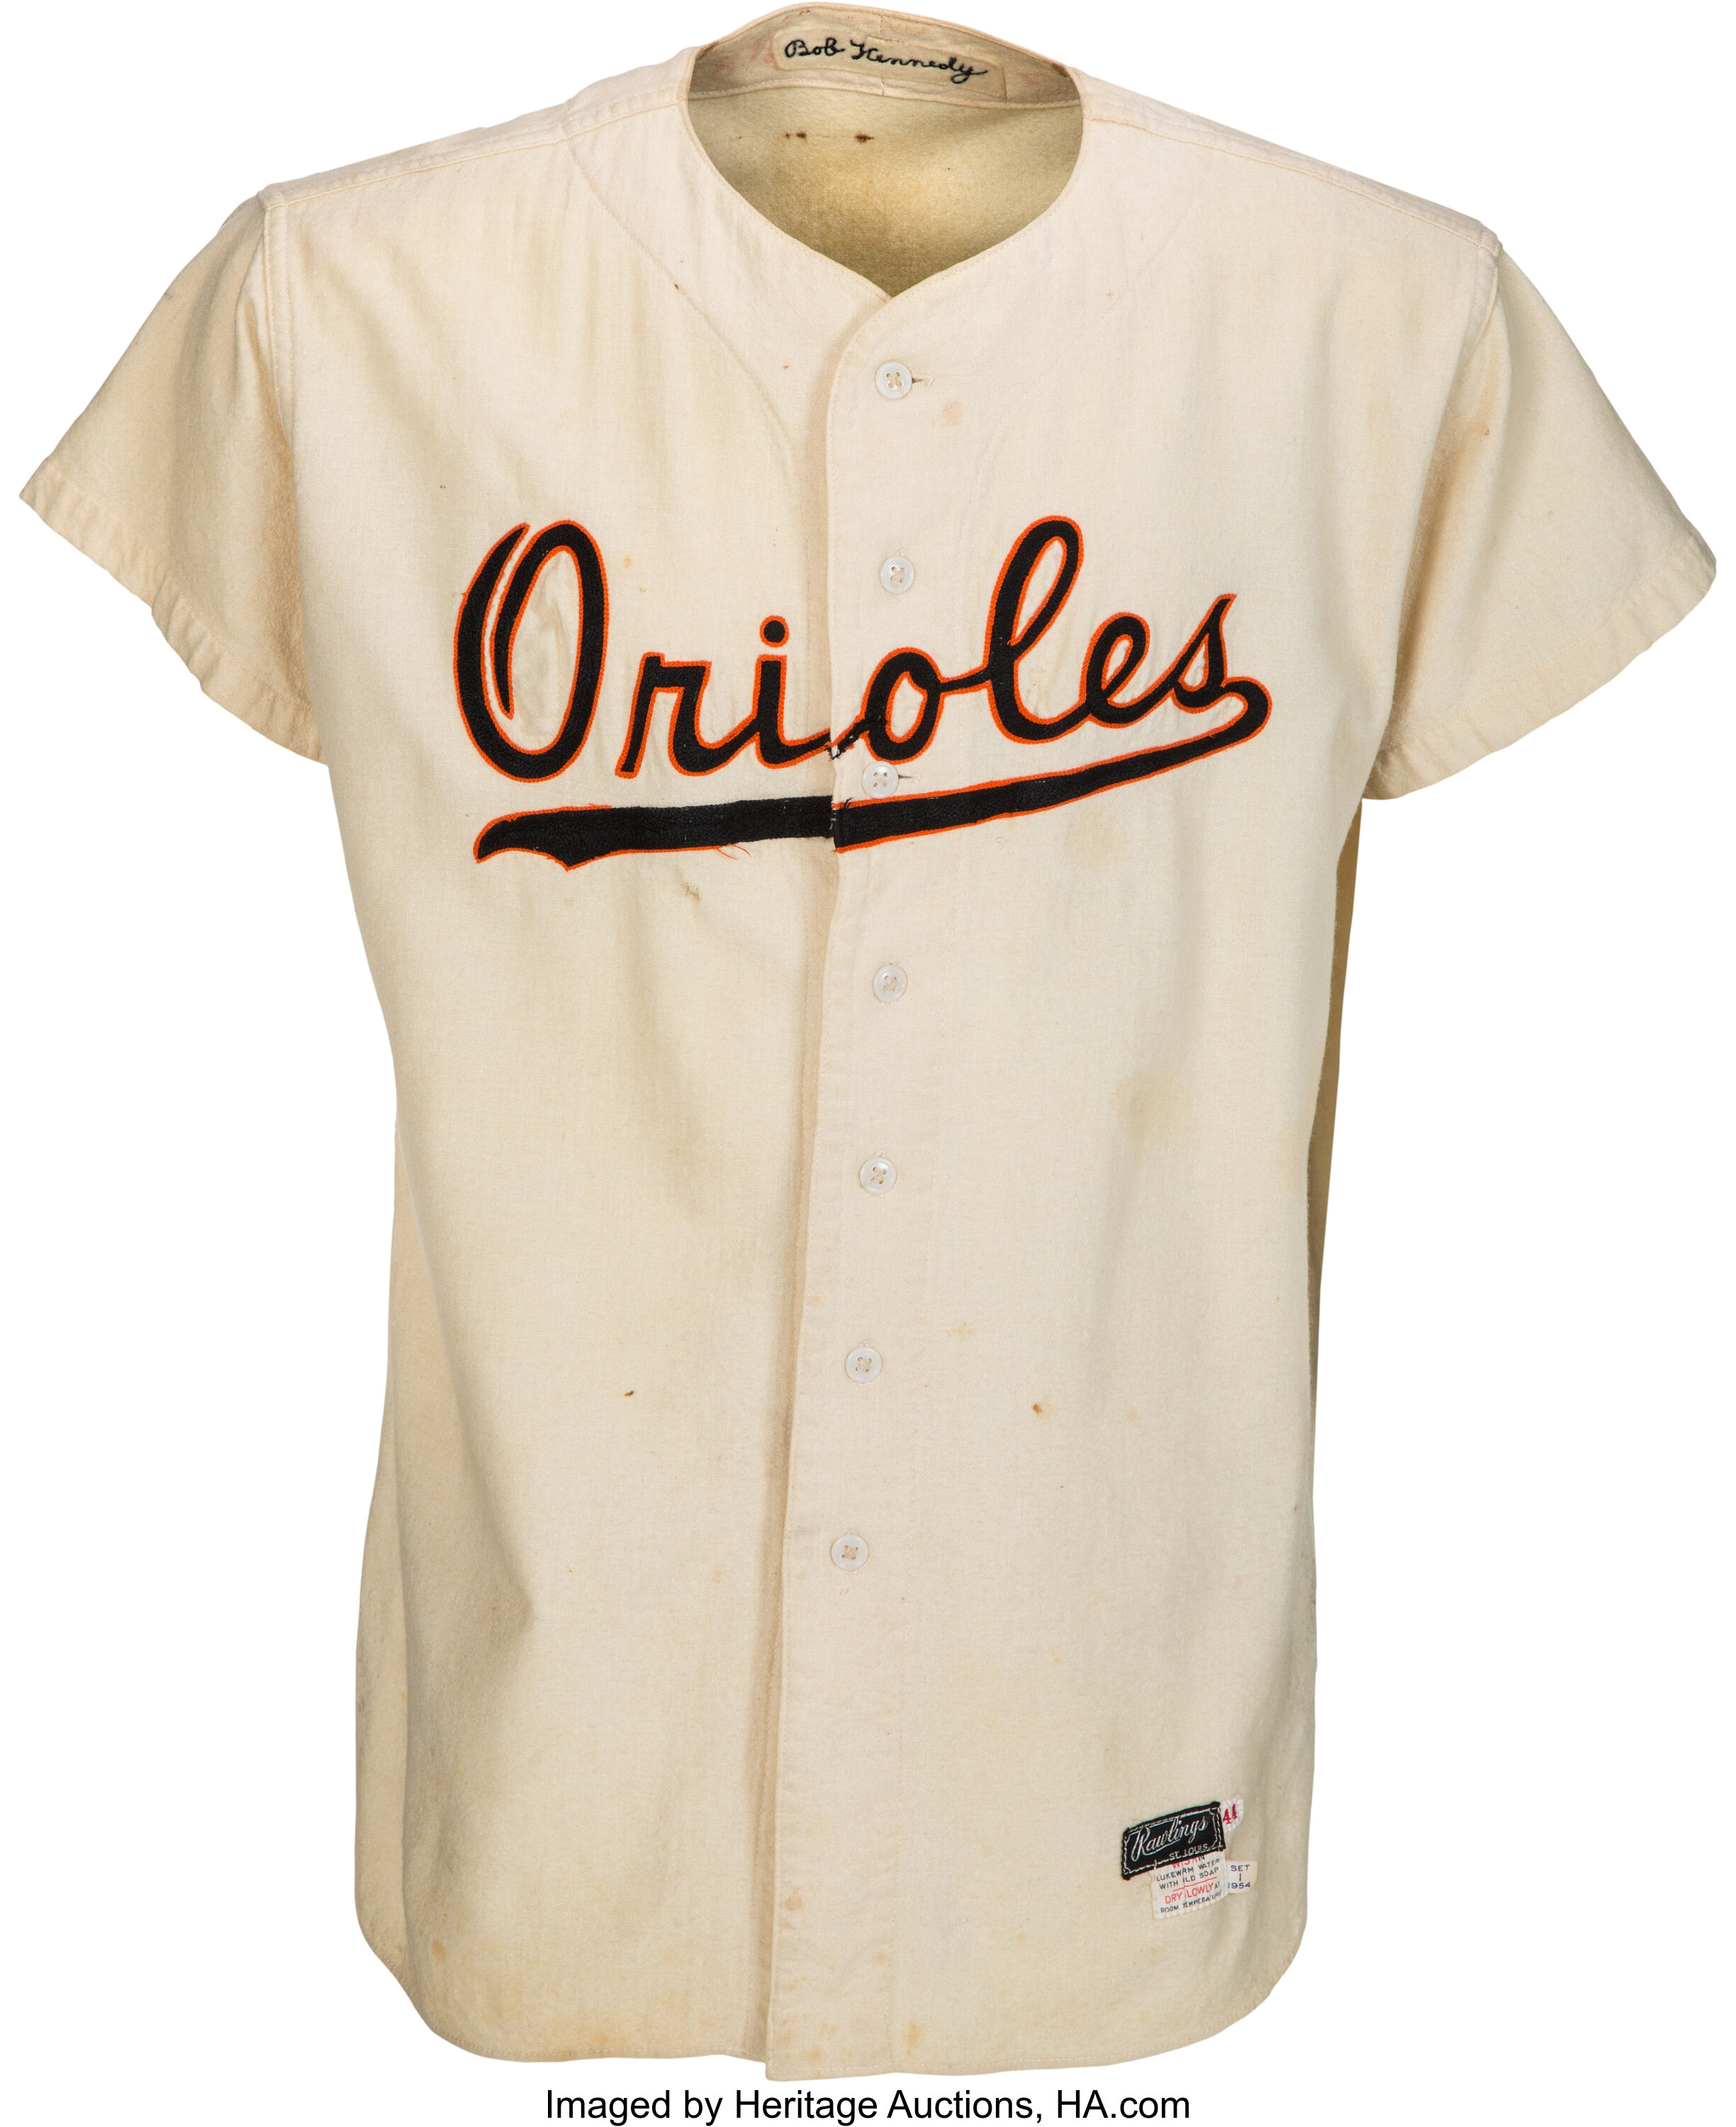 Orioles uniforms: 1954-present